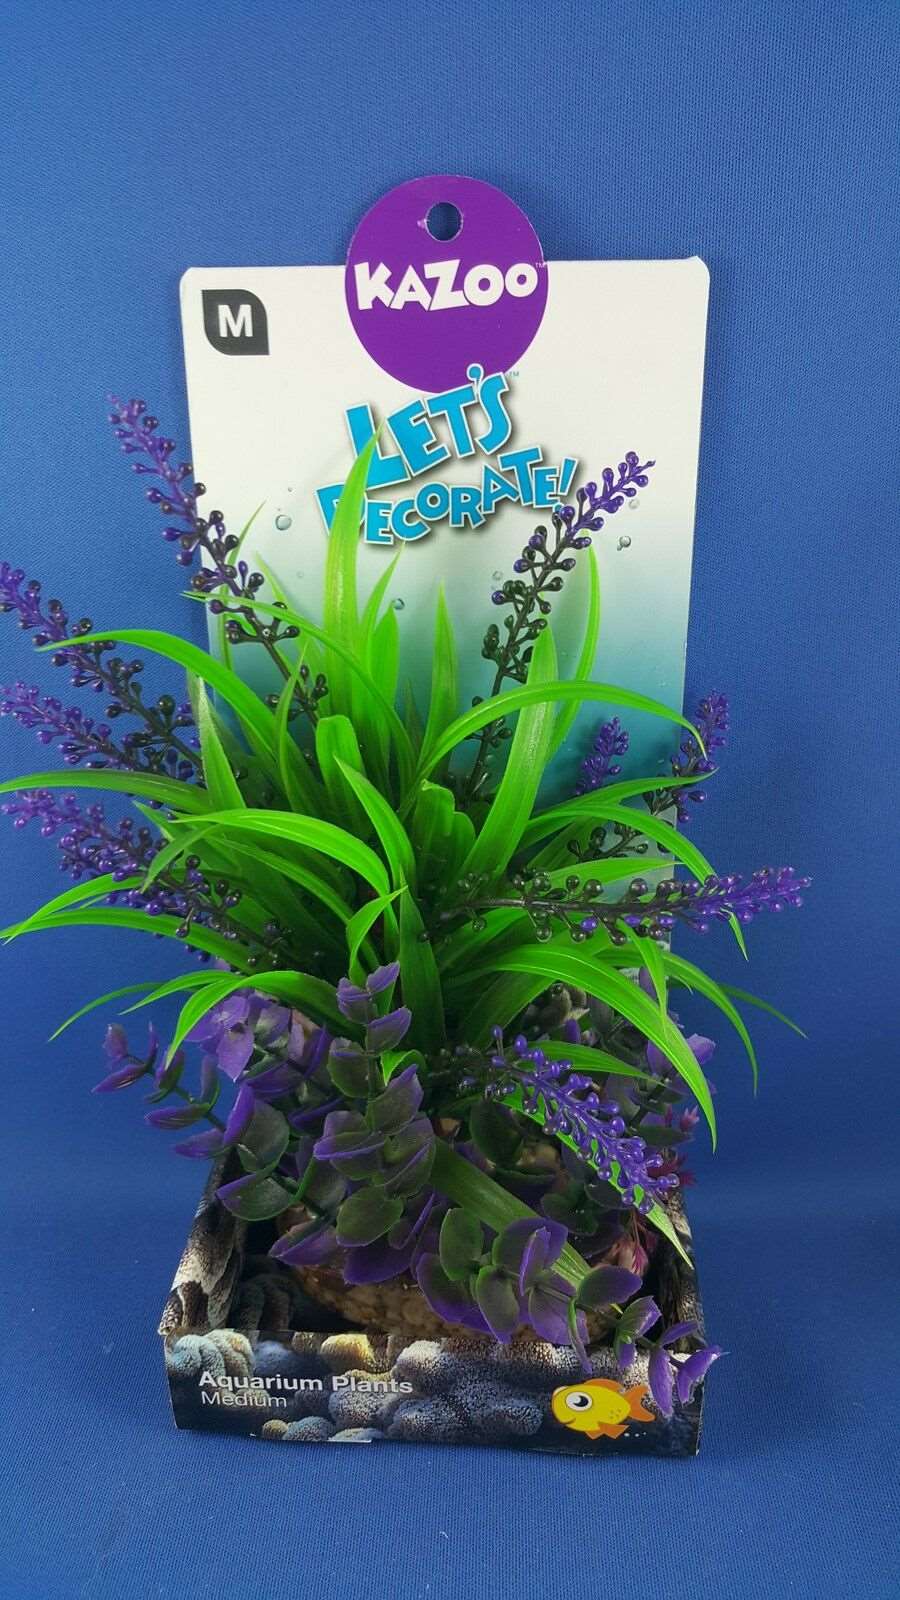 Kazoo aquarium plant, medium size, green &amp; purple leaves with solid pebble base